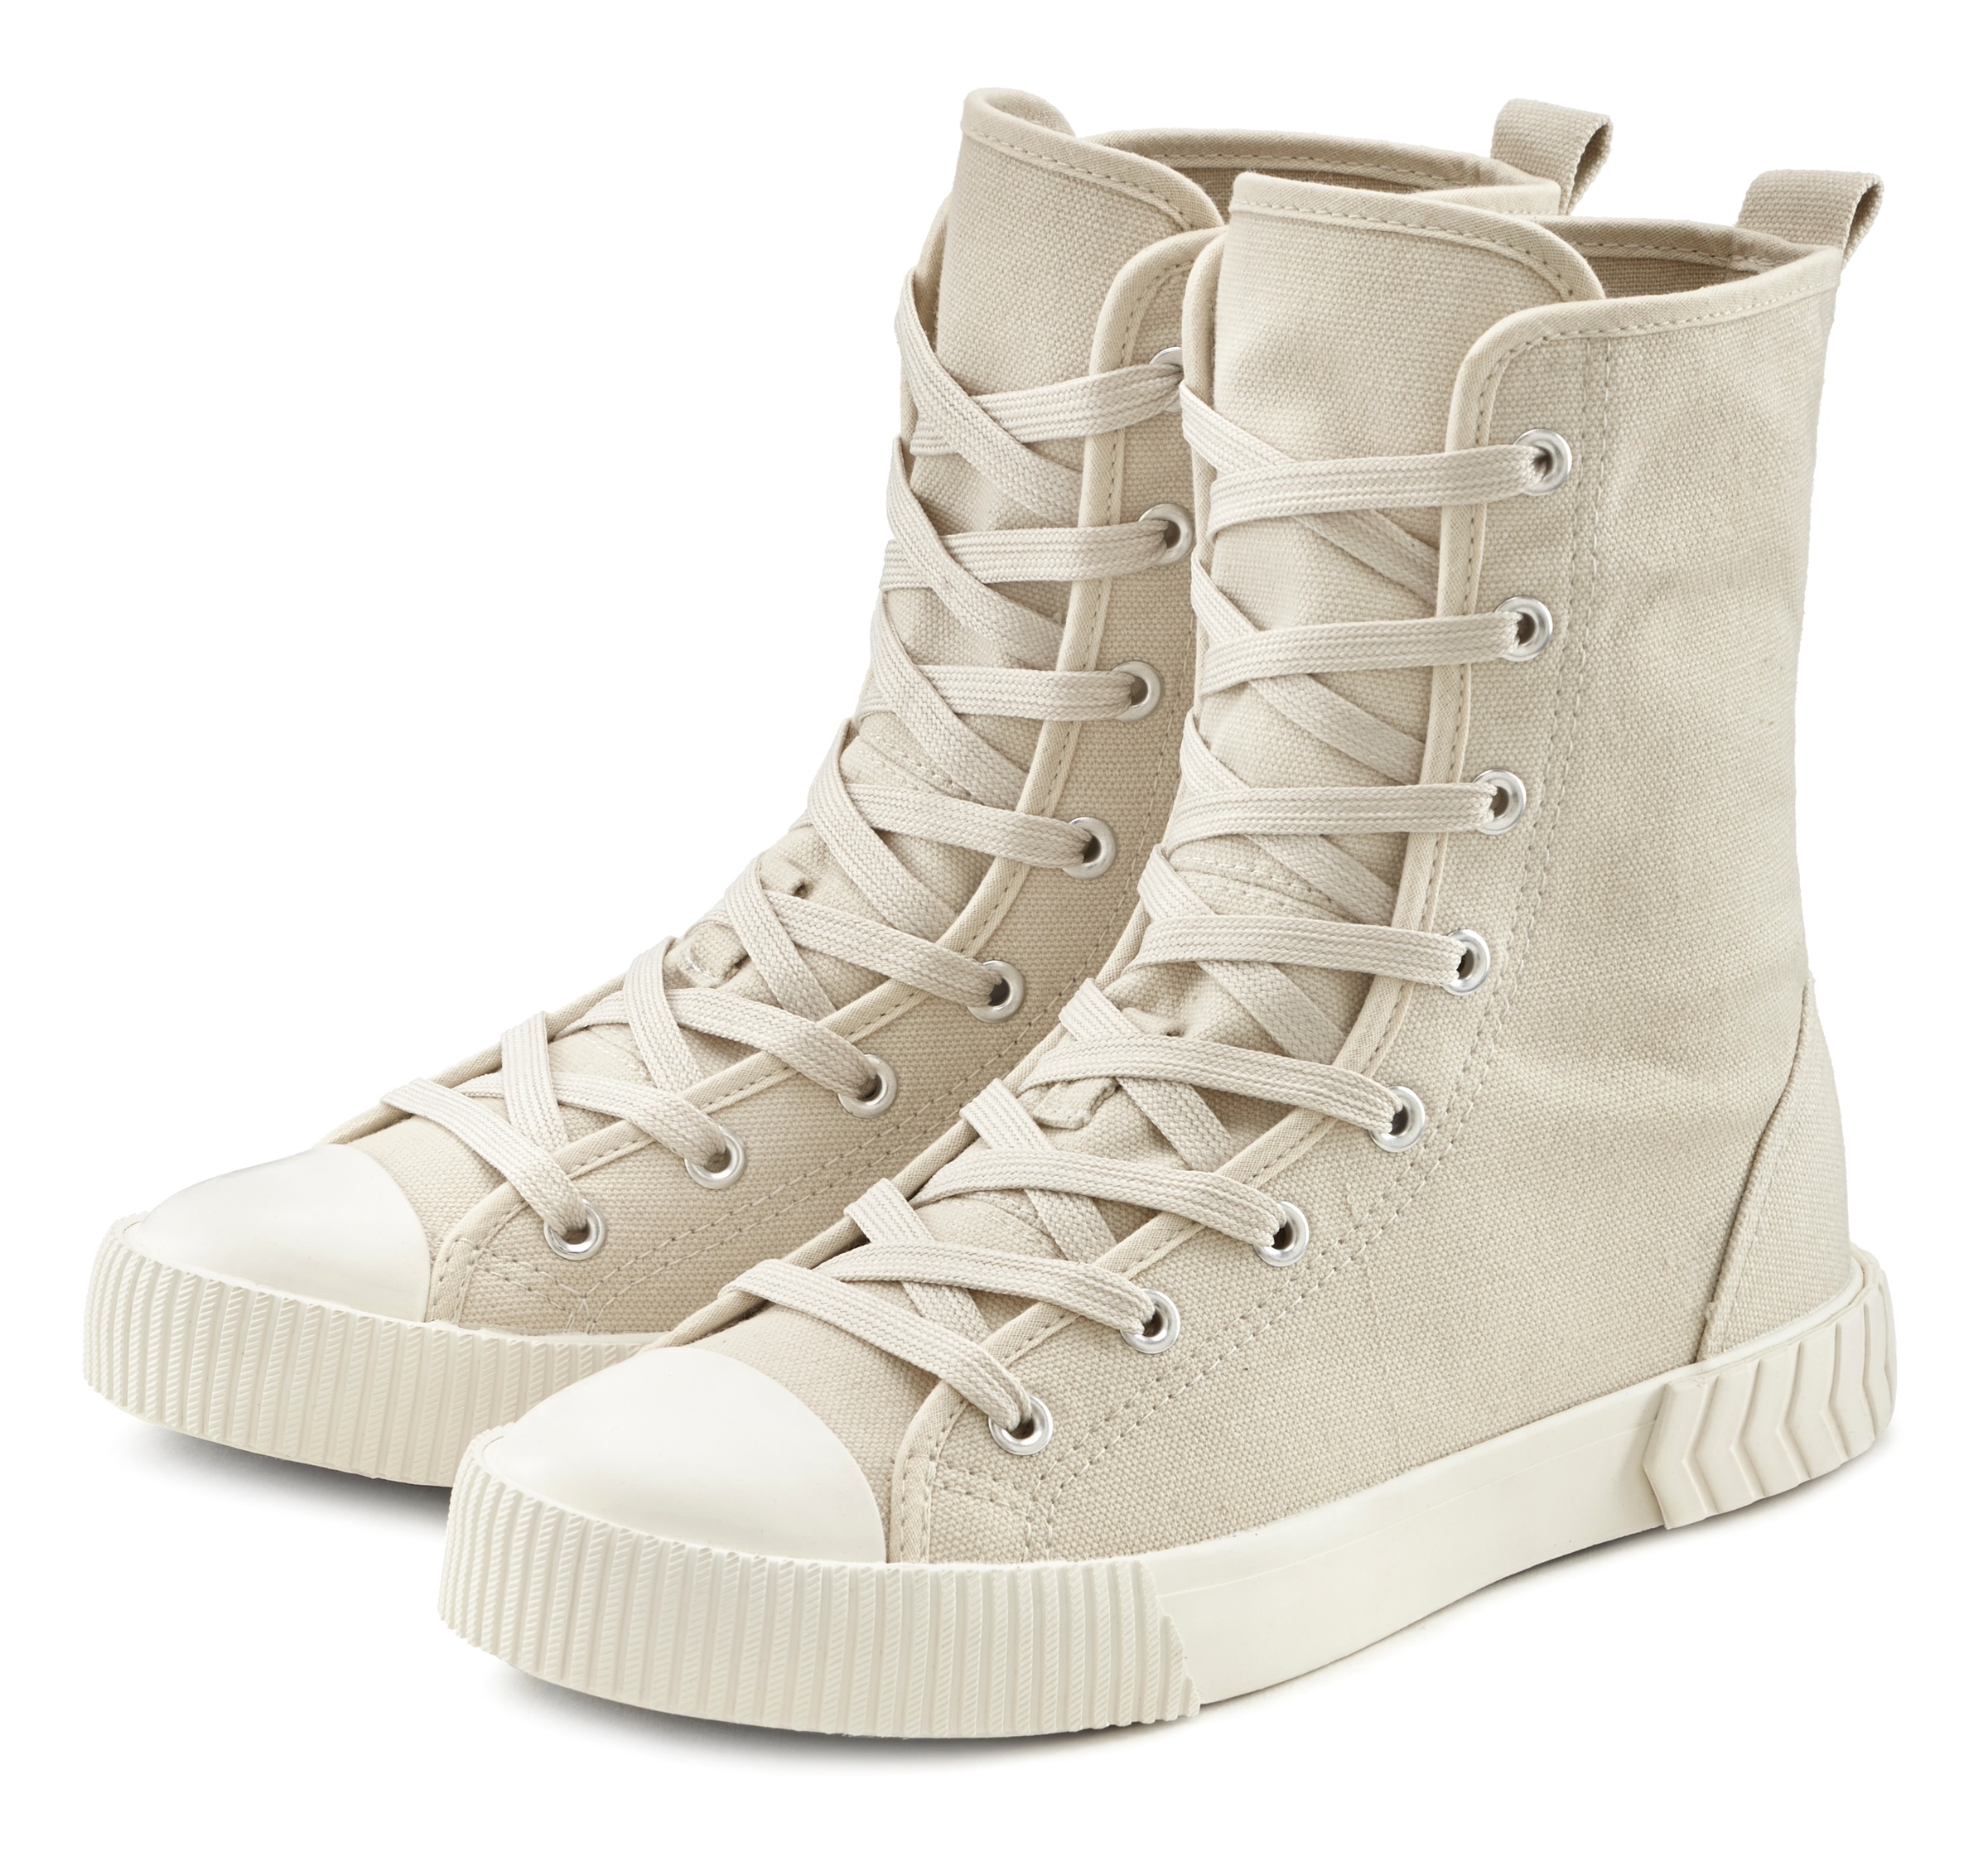 LASCANA Stiefelette, im Top Sneaker, Schnürschuh, High OTTO Textil-Boots, Look Shop bestellen Online Combat trendiger